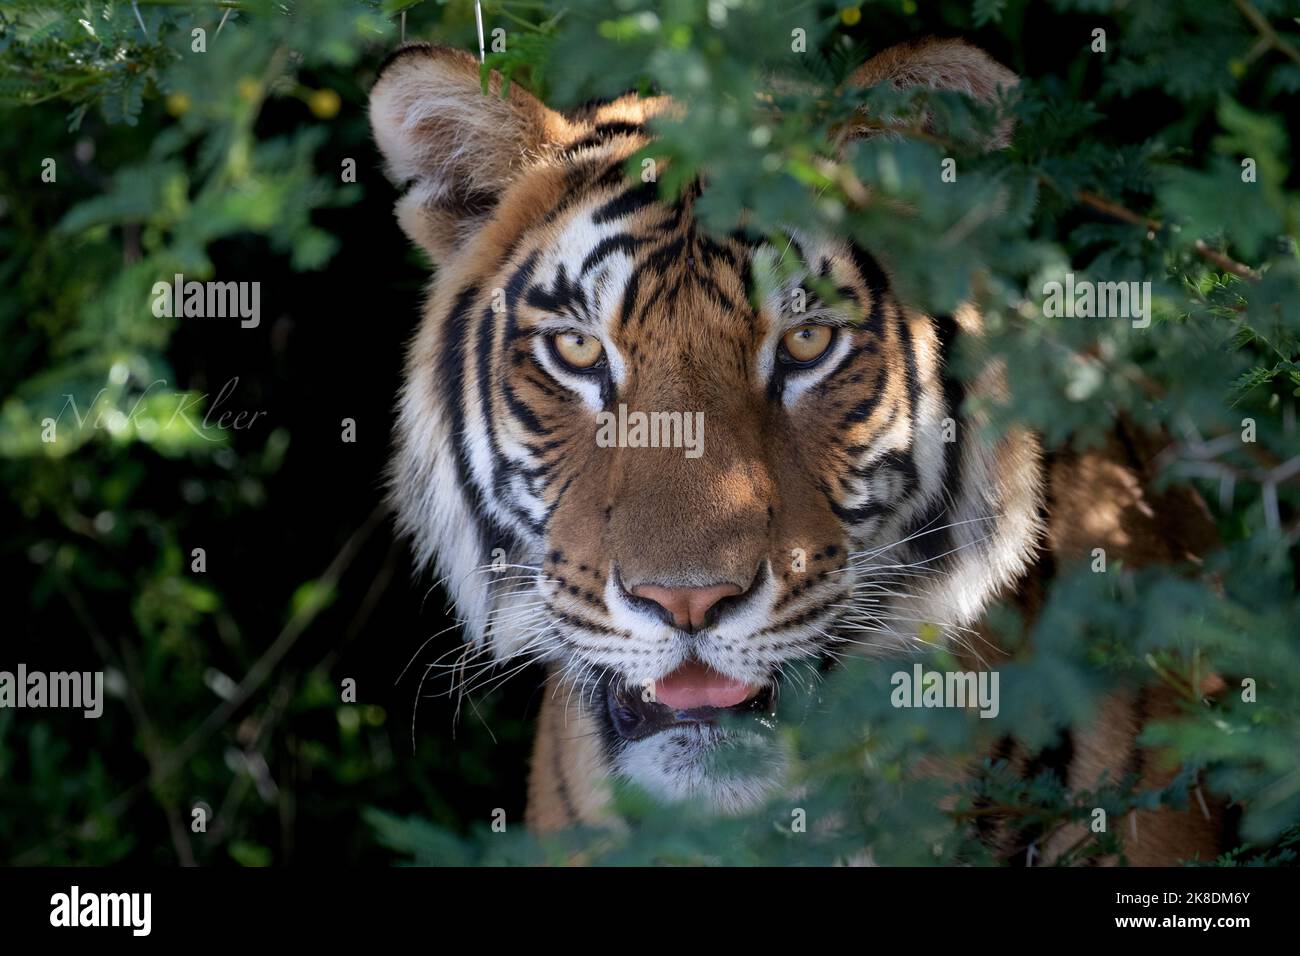 Tiger on Safari, photographed in India Stock Photo